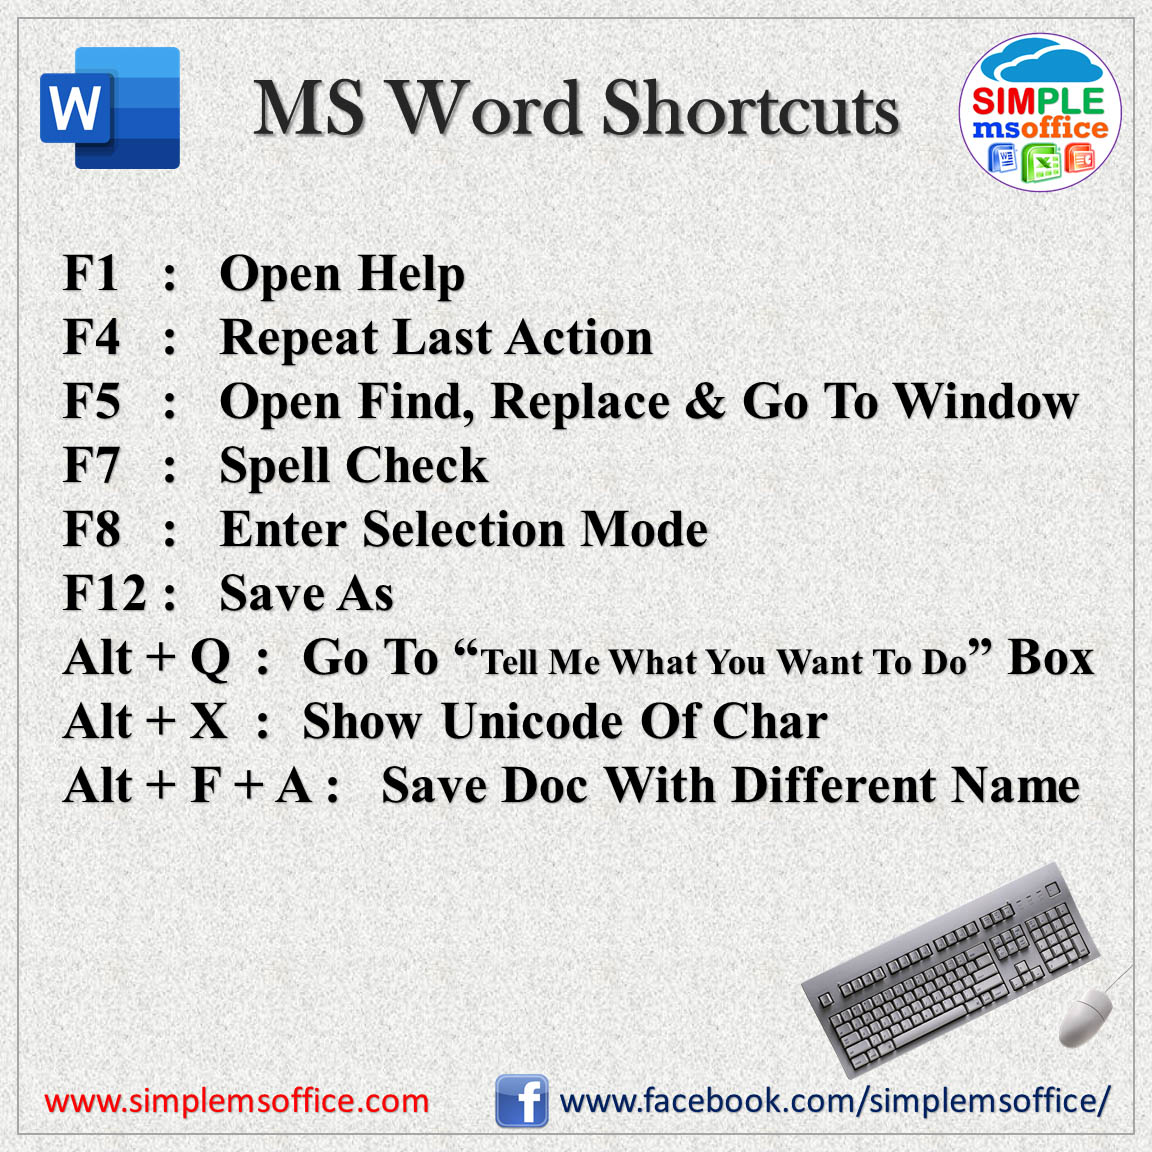 ms-word-shortcuts-02-simplemsoffice